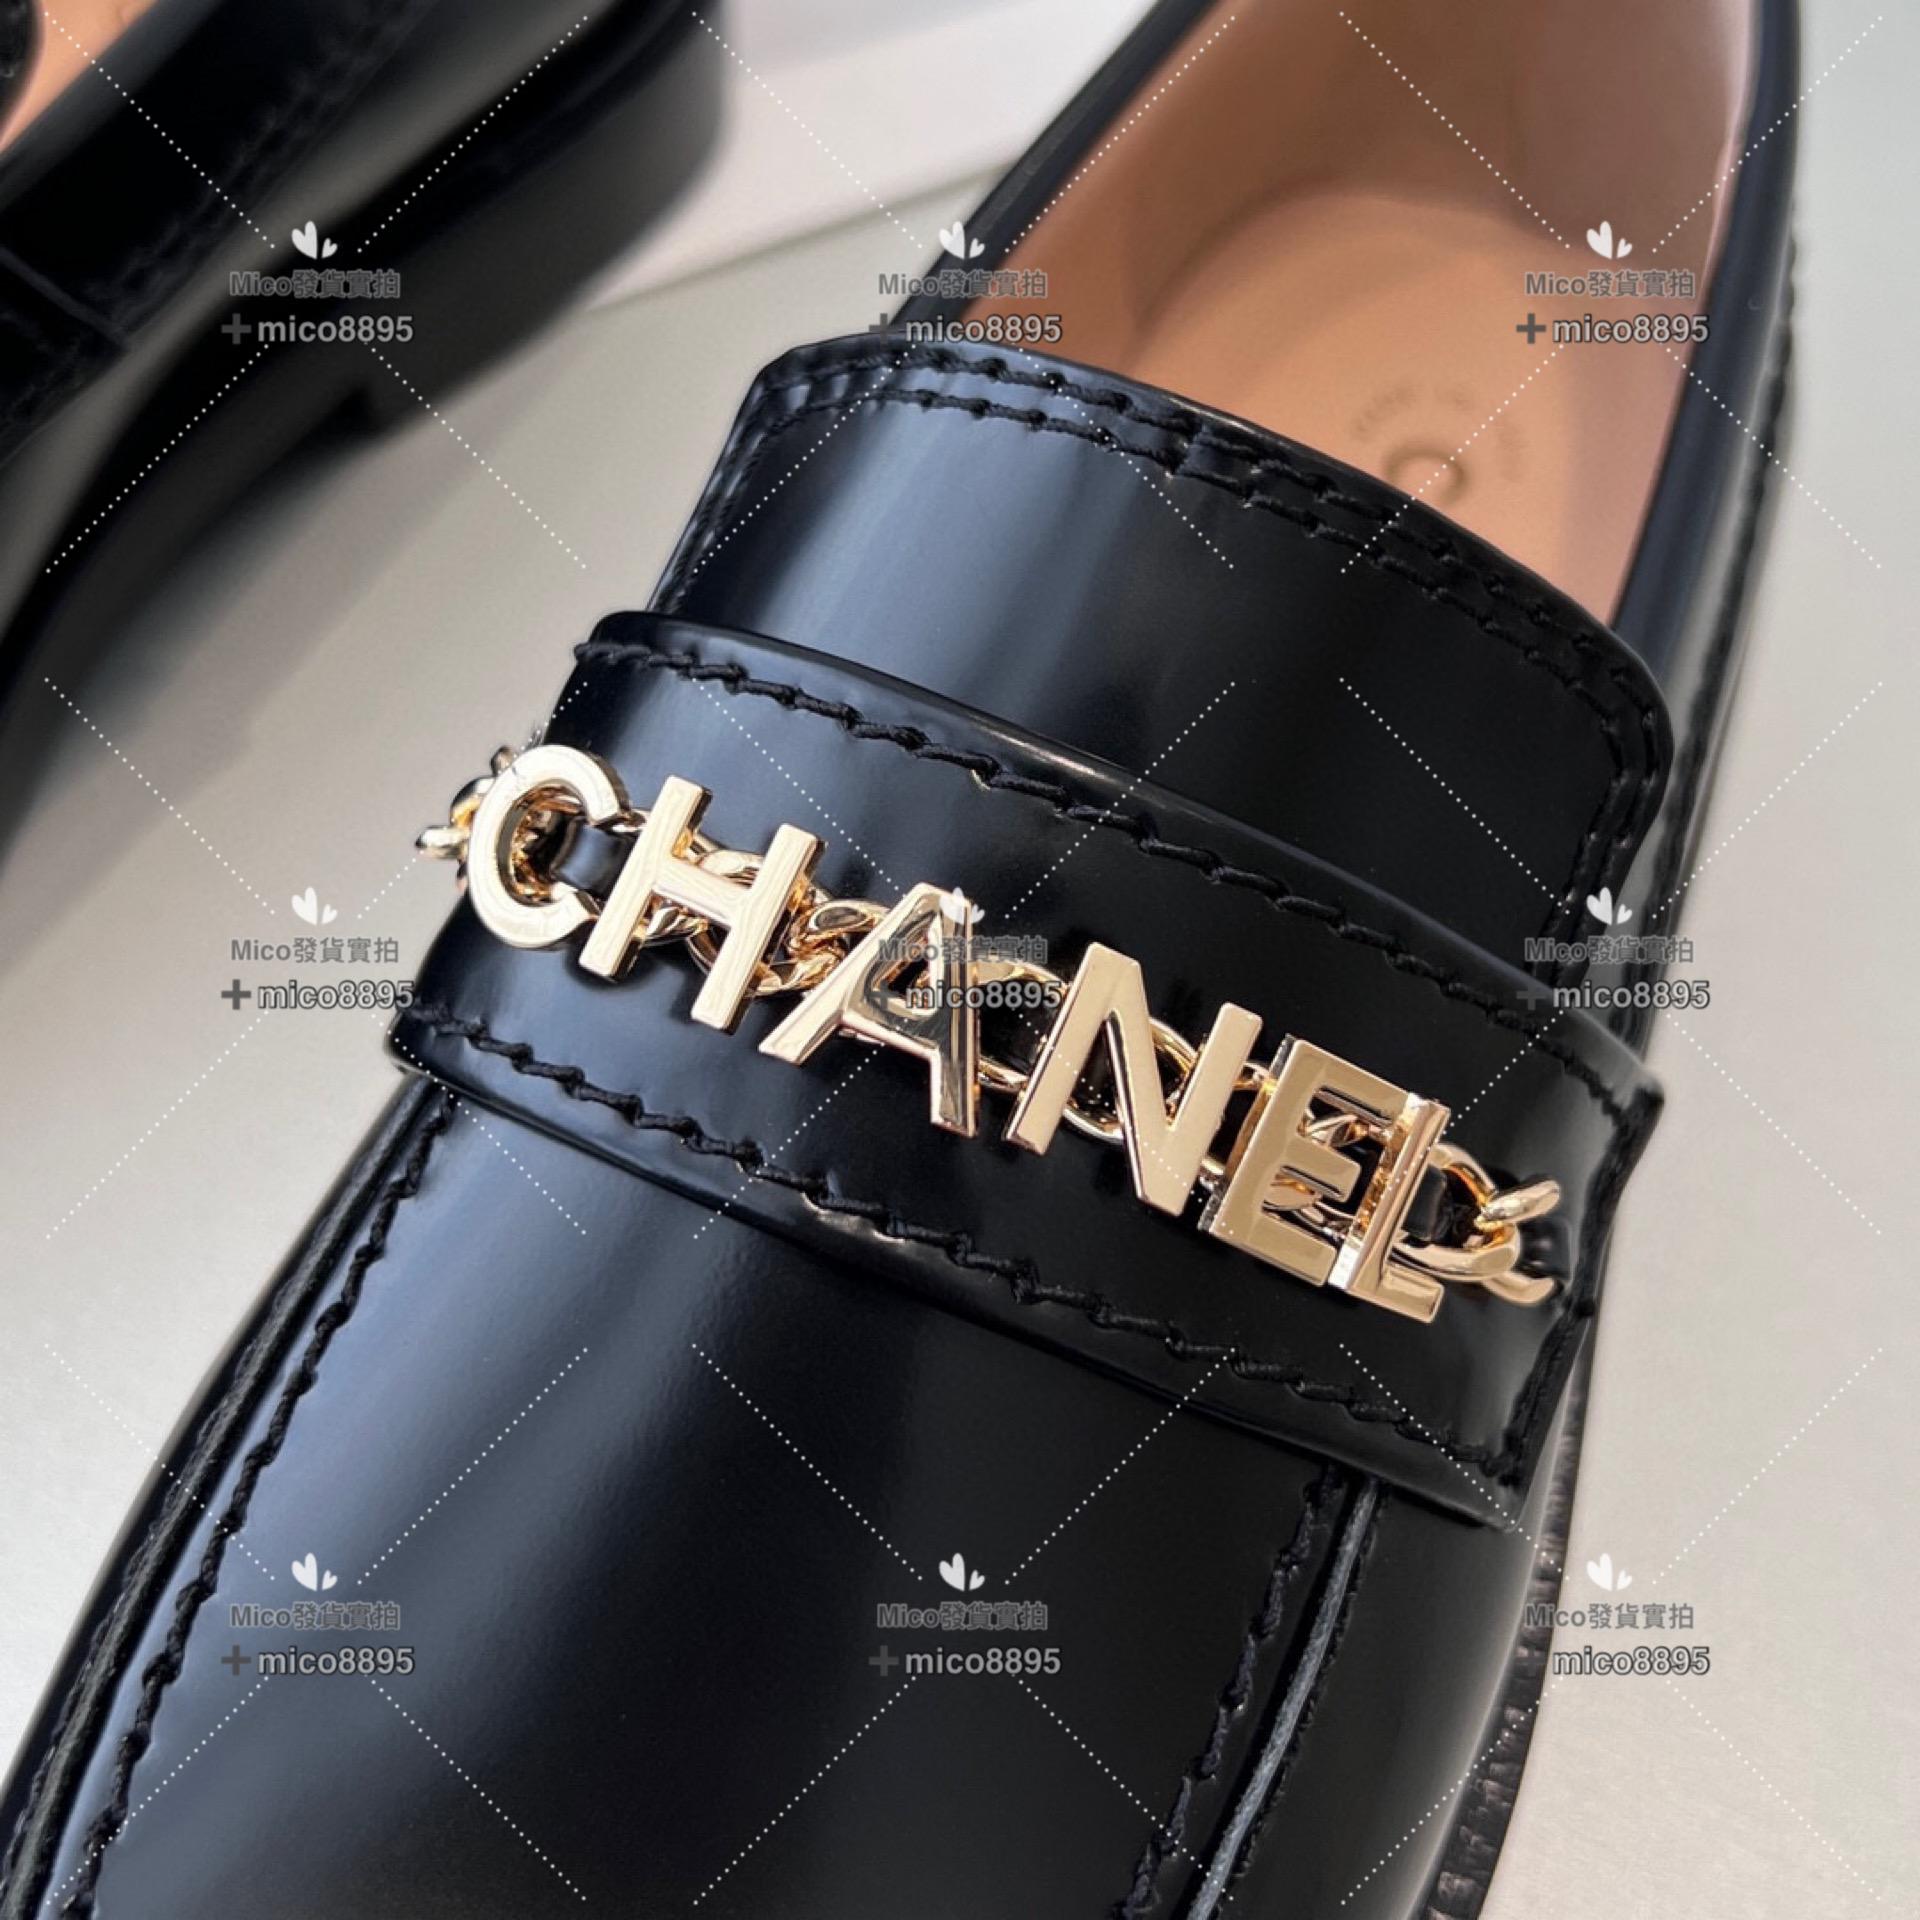 Chanel 漆皮黑色 字母金屬long樂福鞋 復古風格 秋冬 35-39